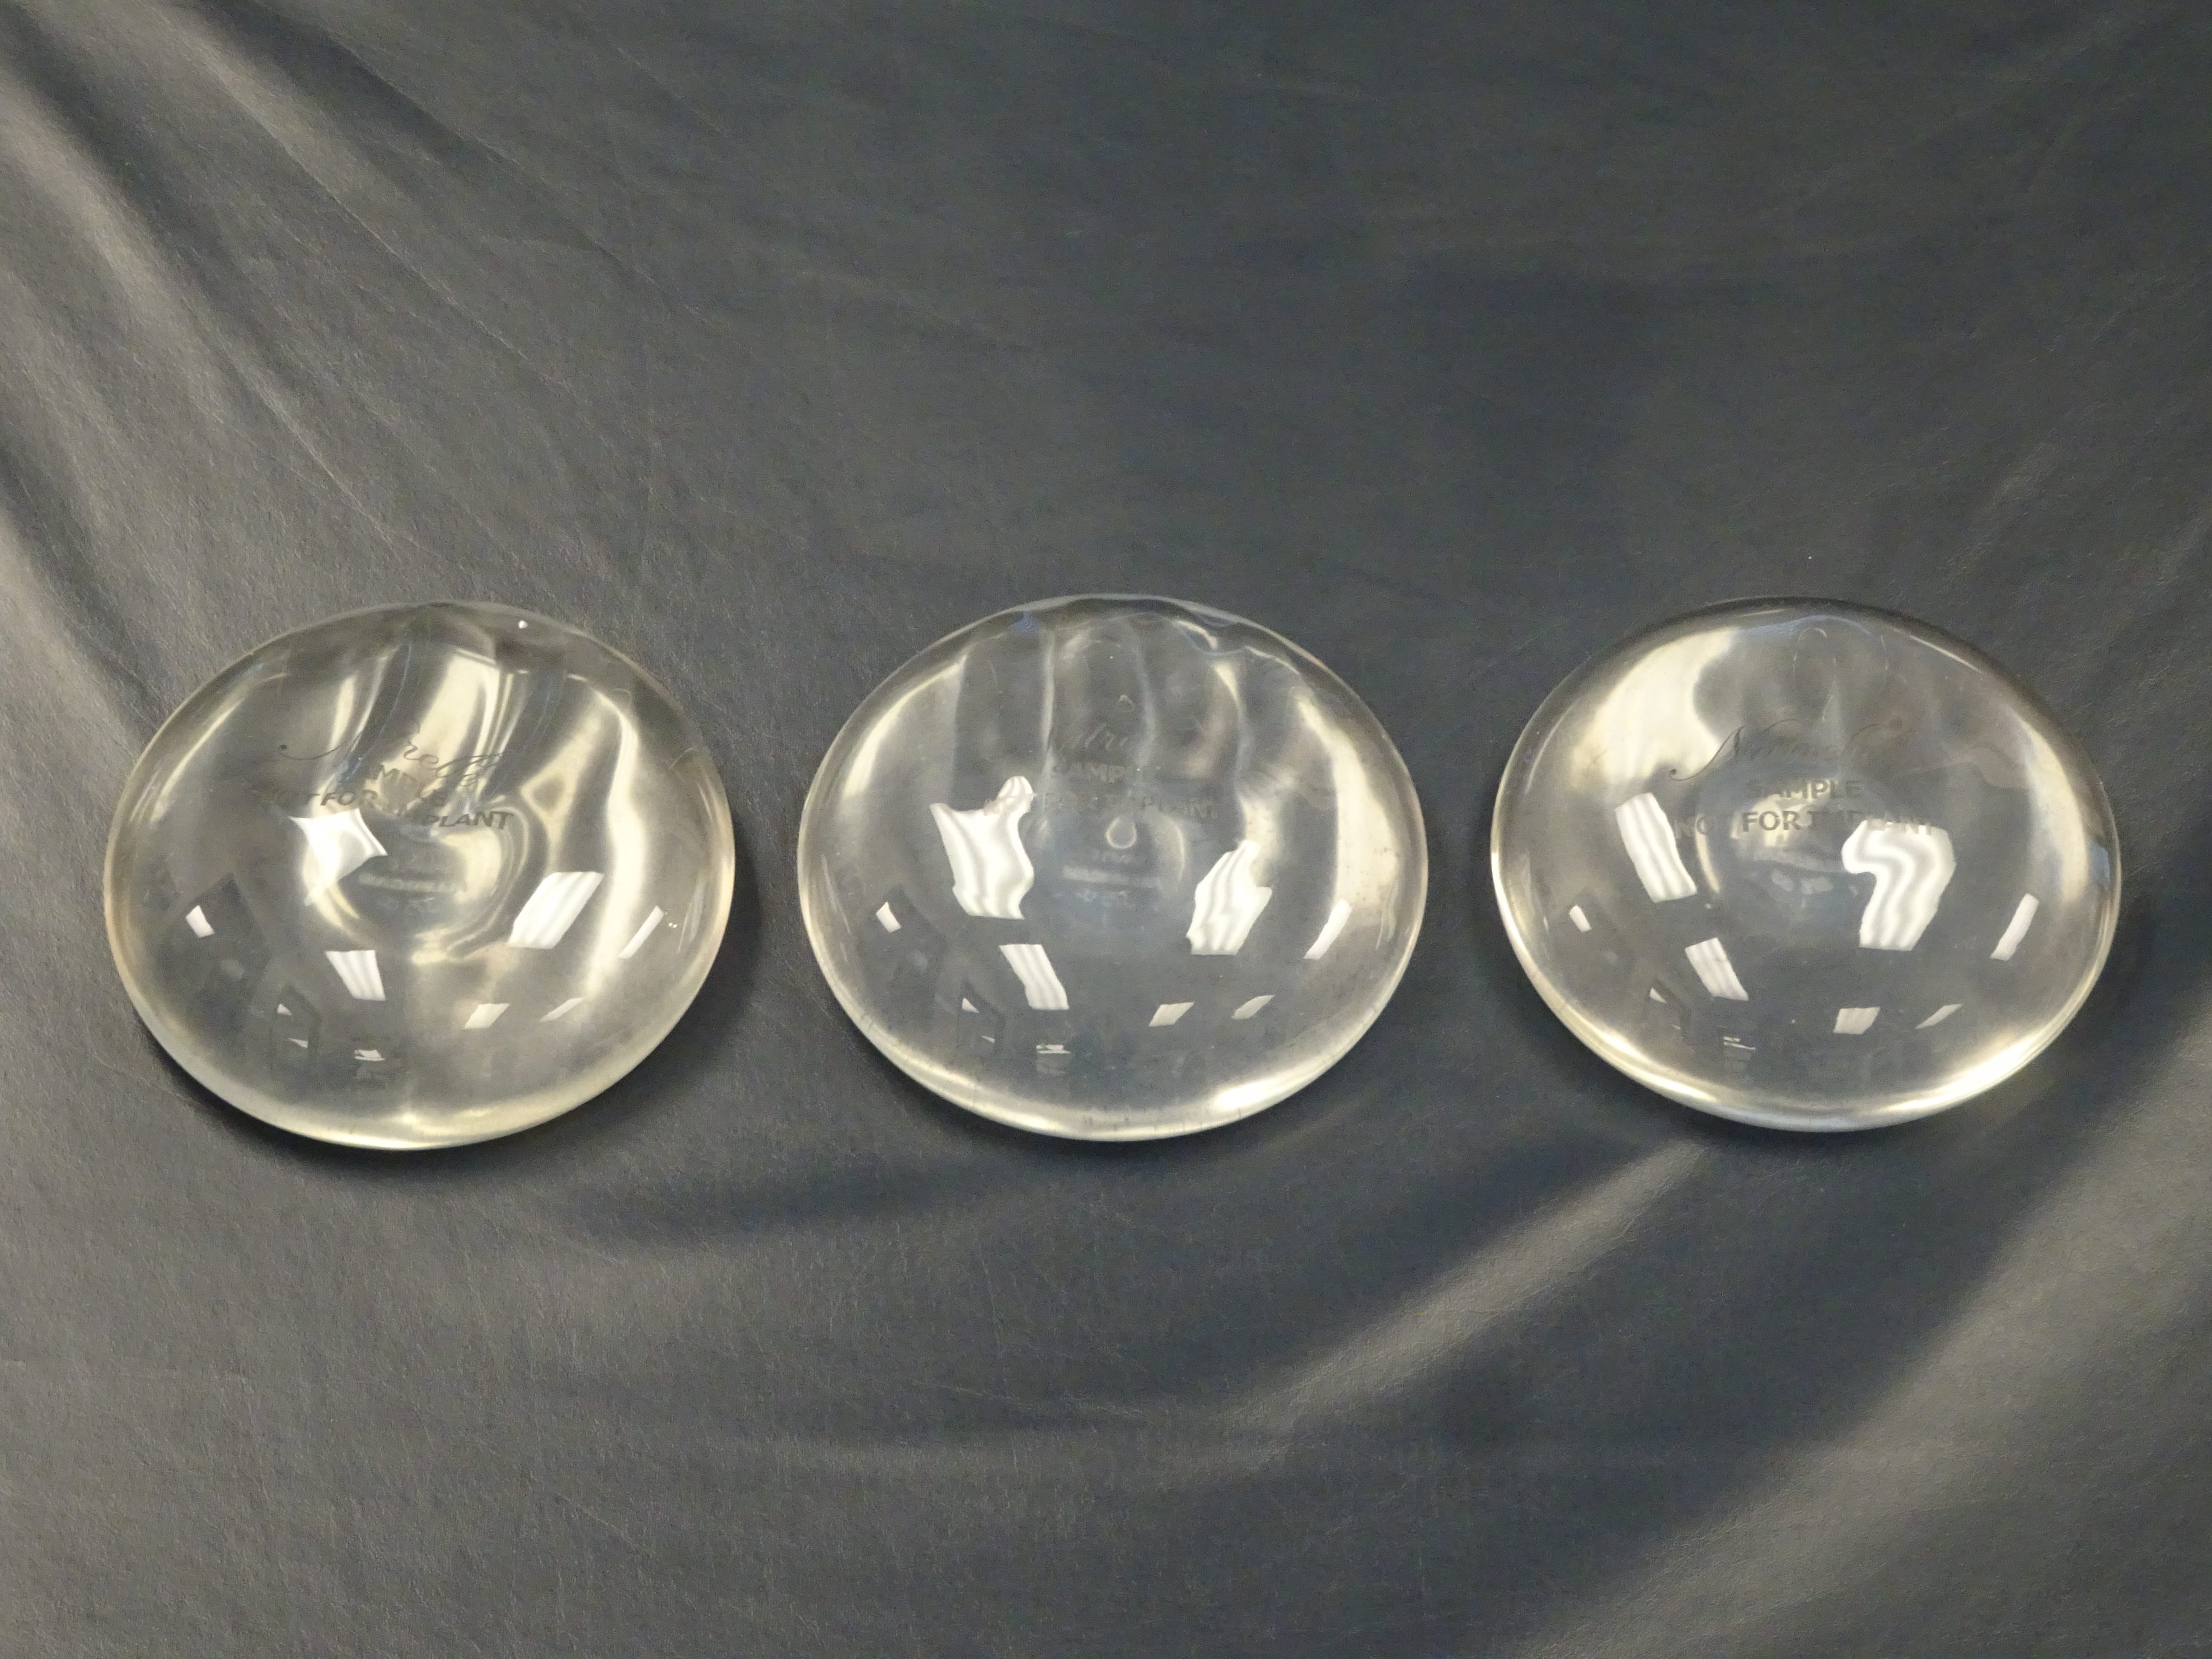 Gummy Bear Implants for Breast Enhancement in Boca Raton - Farber